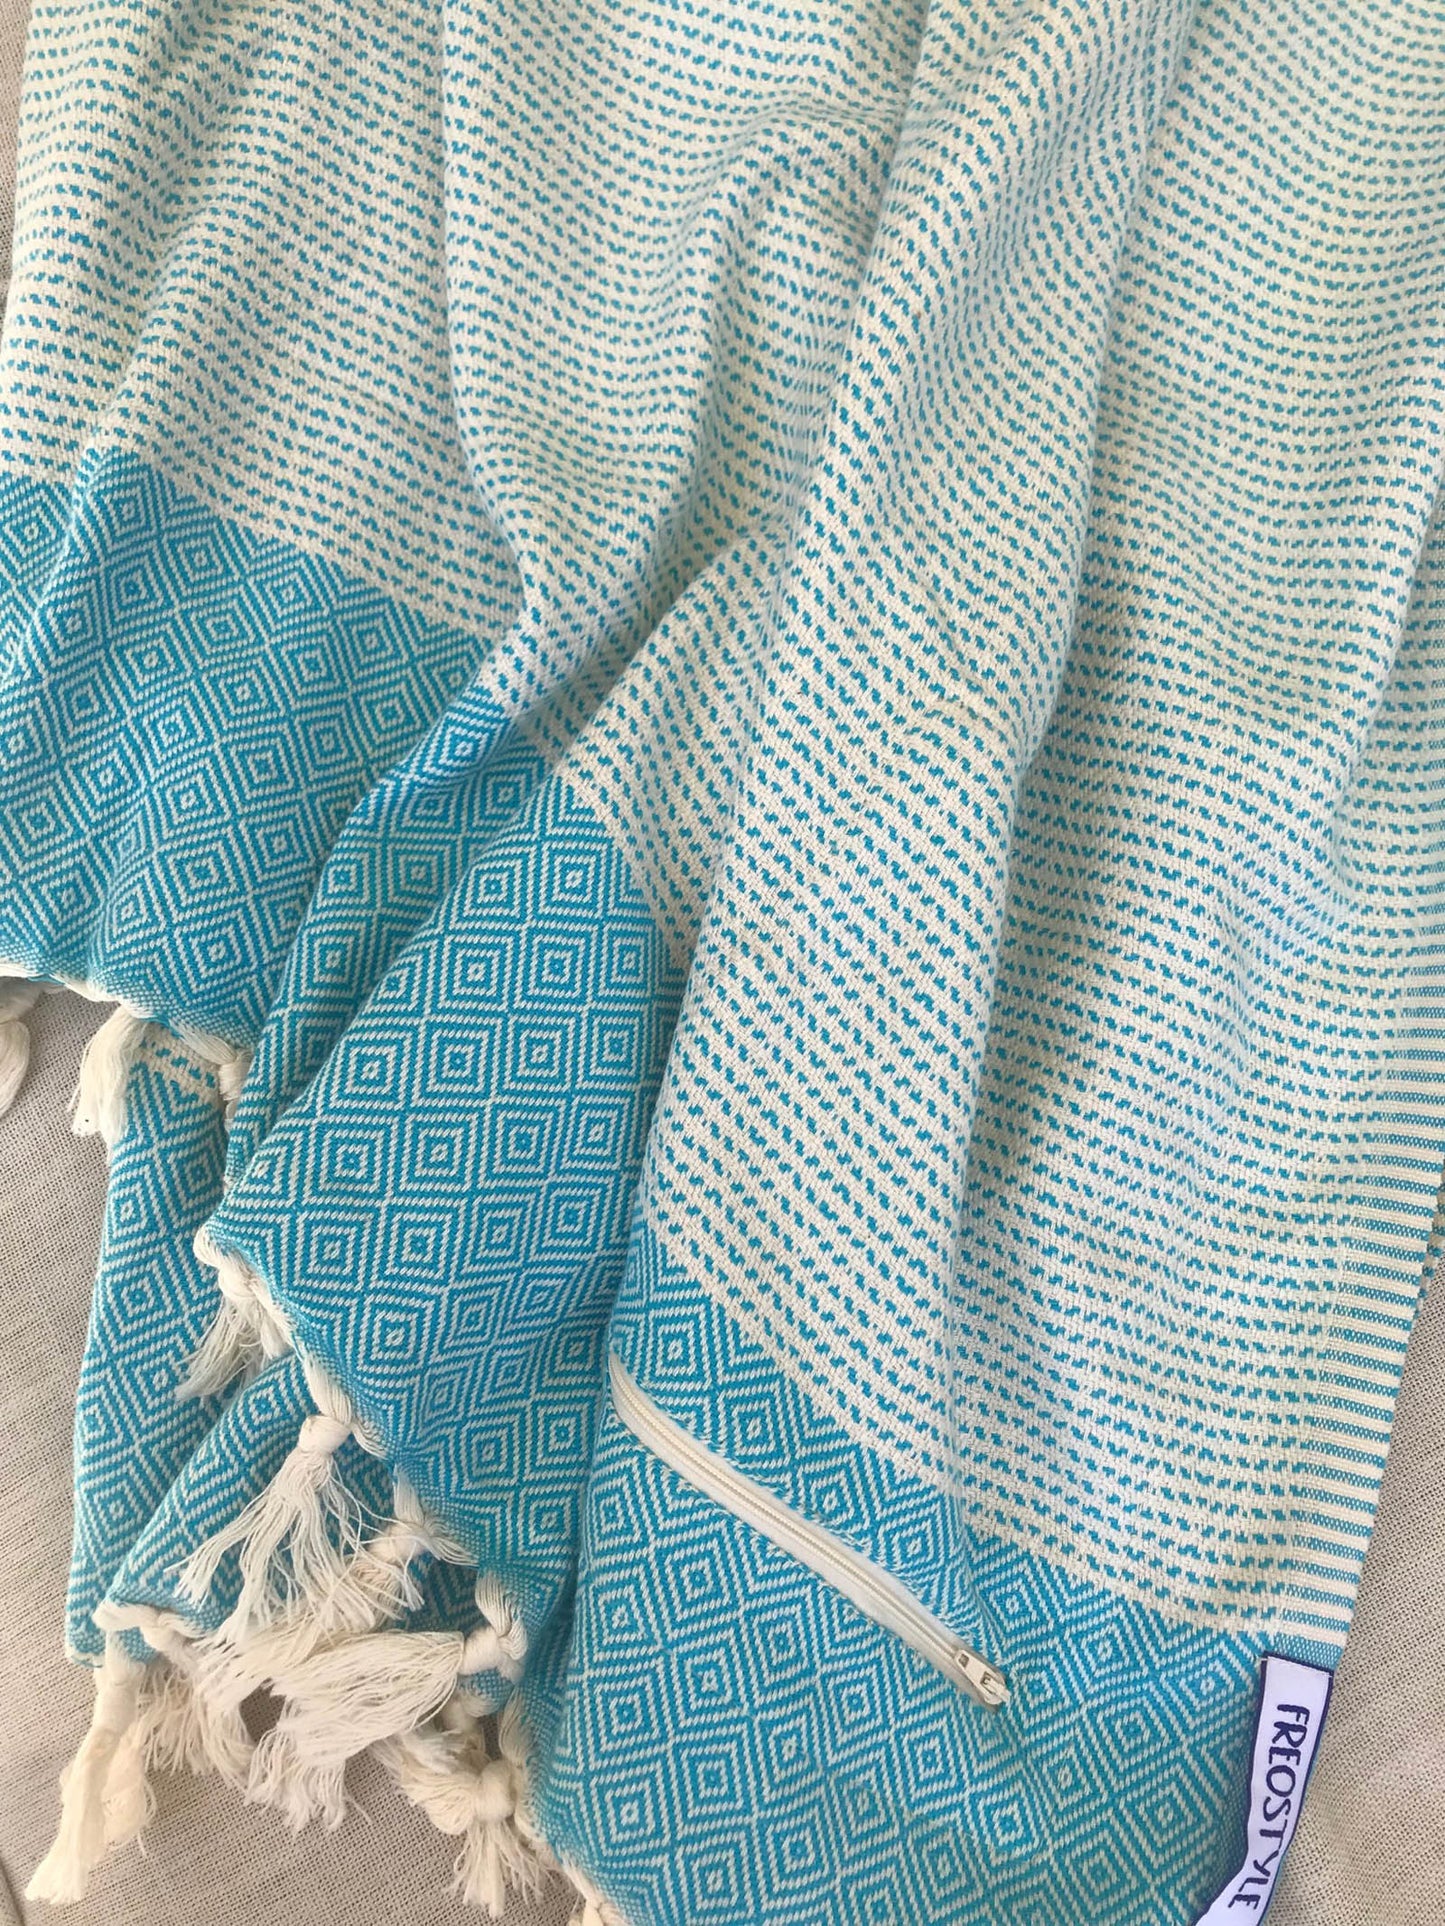 Freostyle Turkish Beach Towel with Pockets, Capri, Aqua Blue, displayed